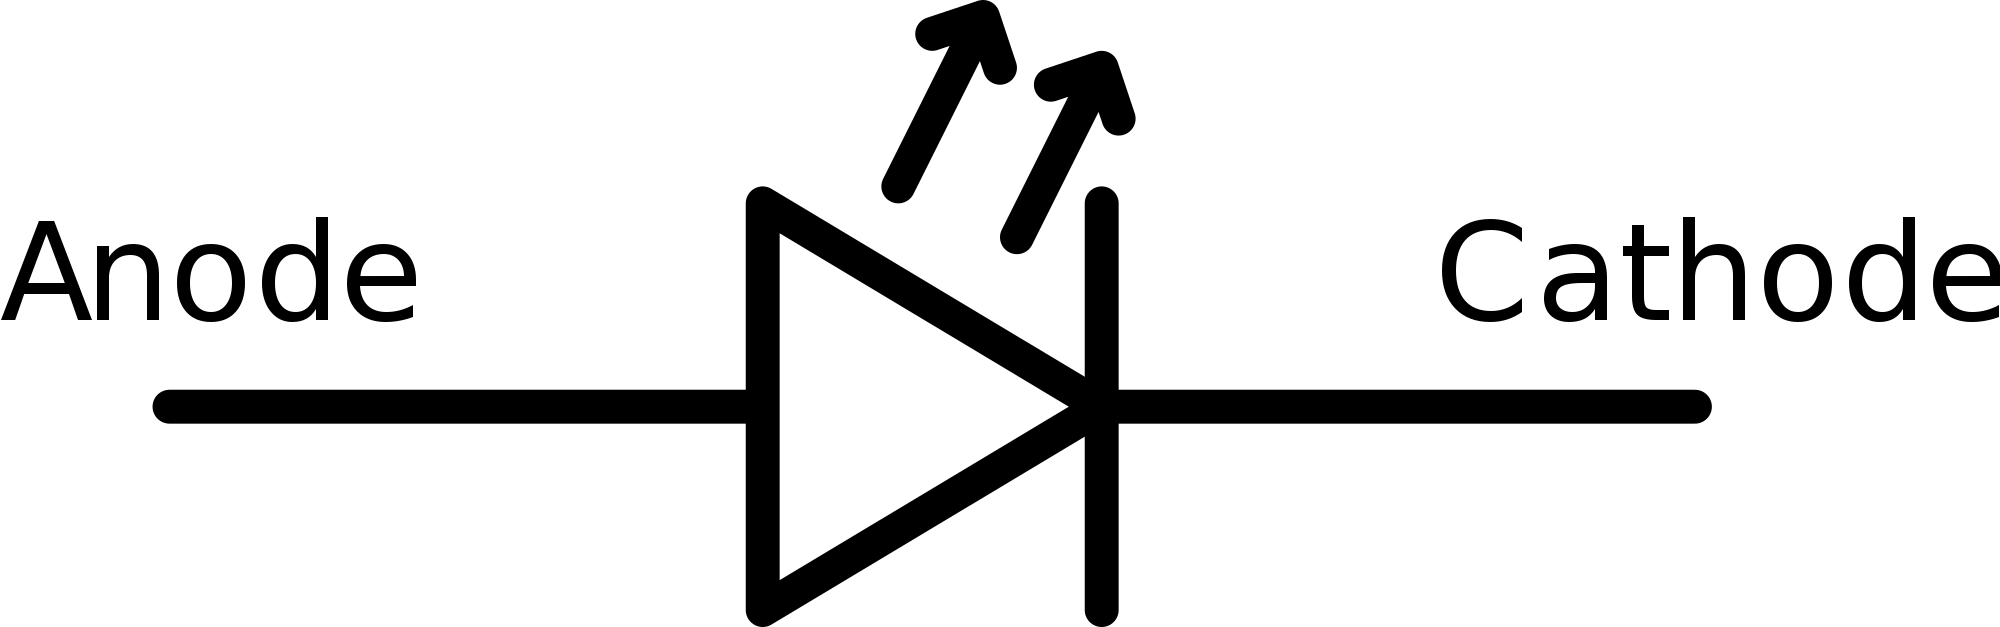 Led Clip Art Medium Size - Schottky Diode Schematic Symbol (2000x627)